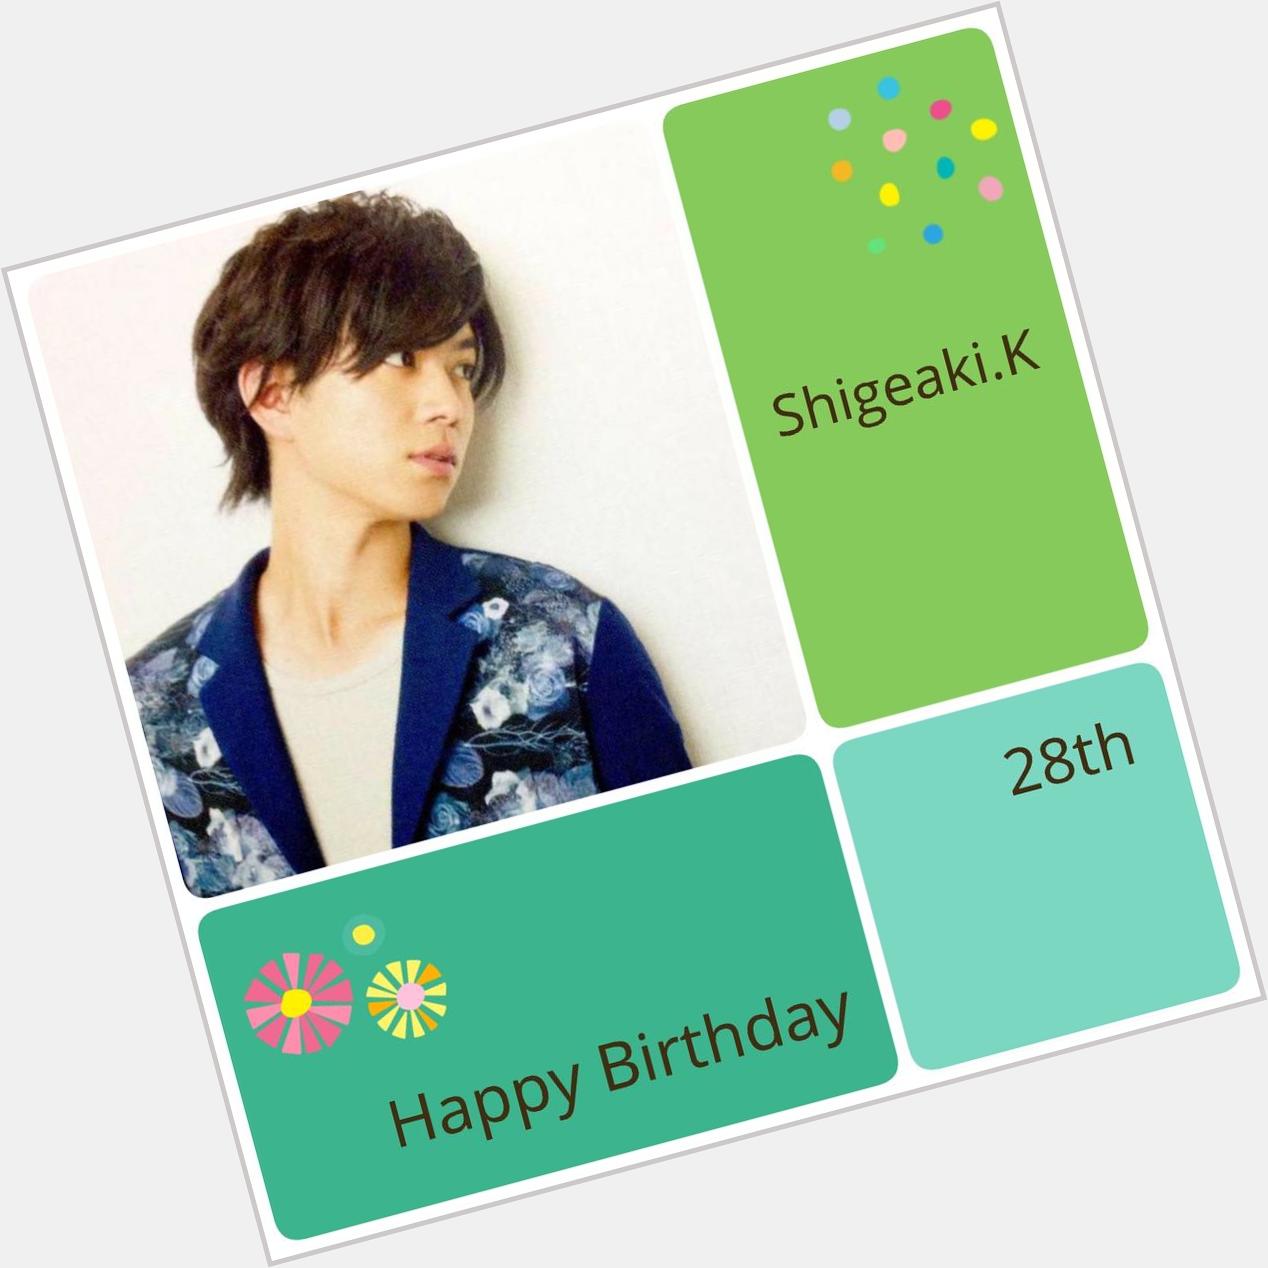 Happy Birthday Shigeaki kato

28                                                                          